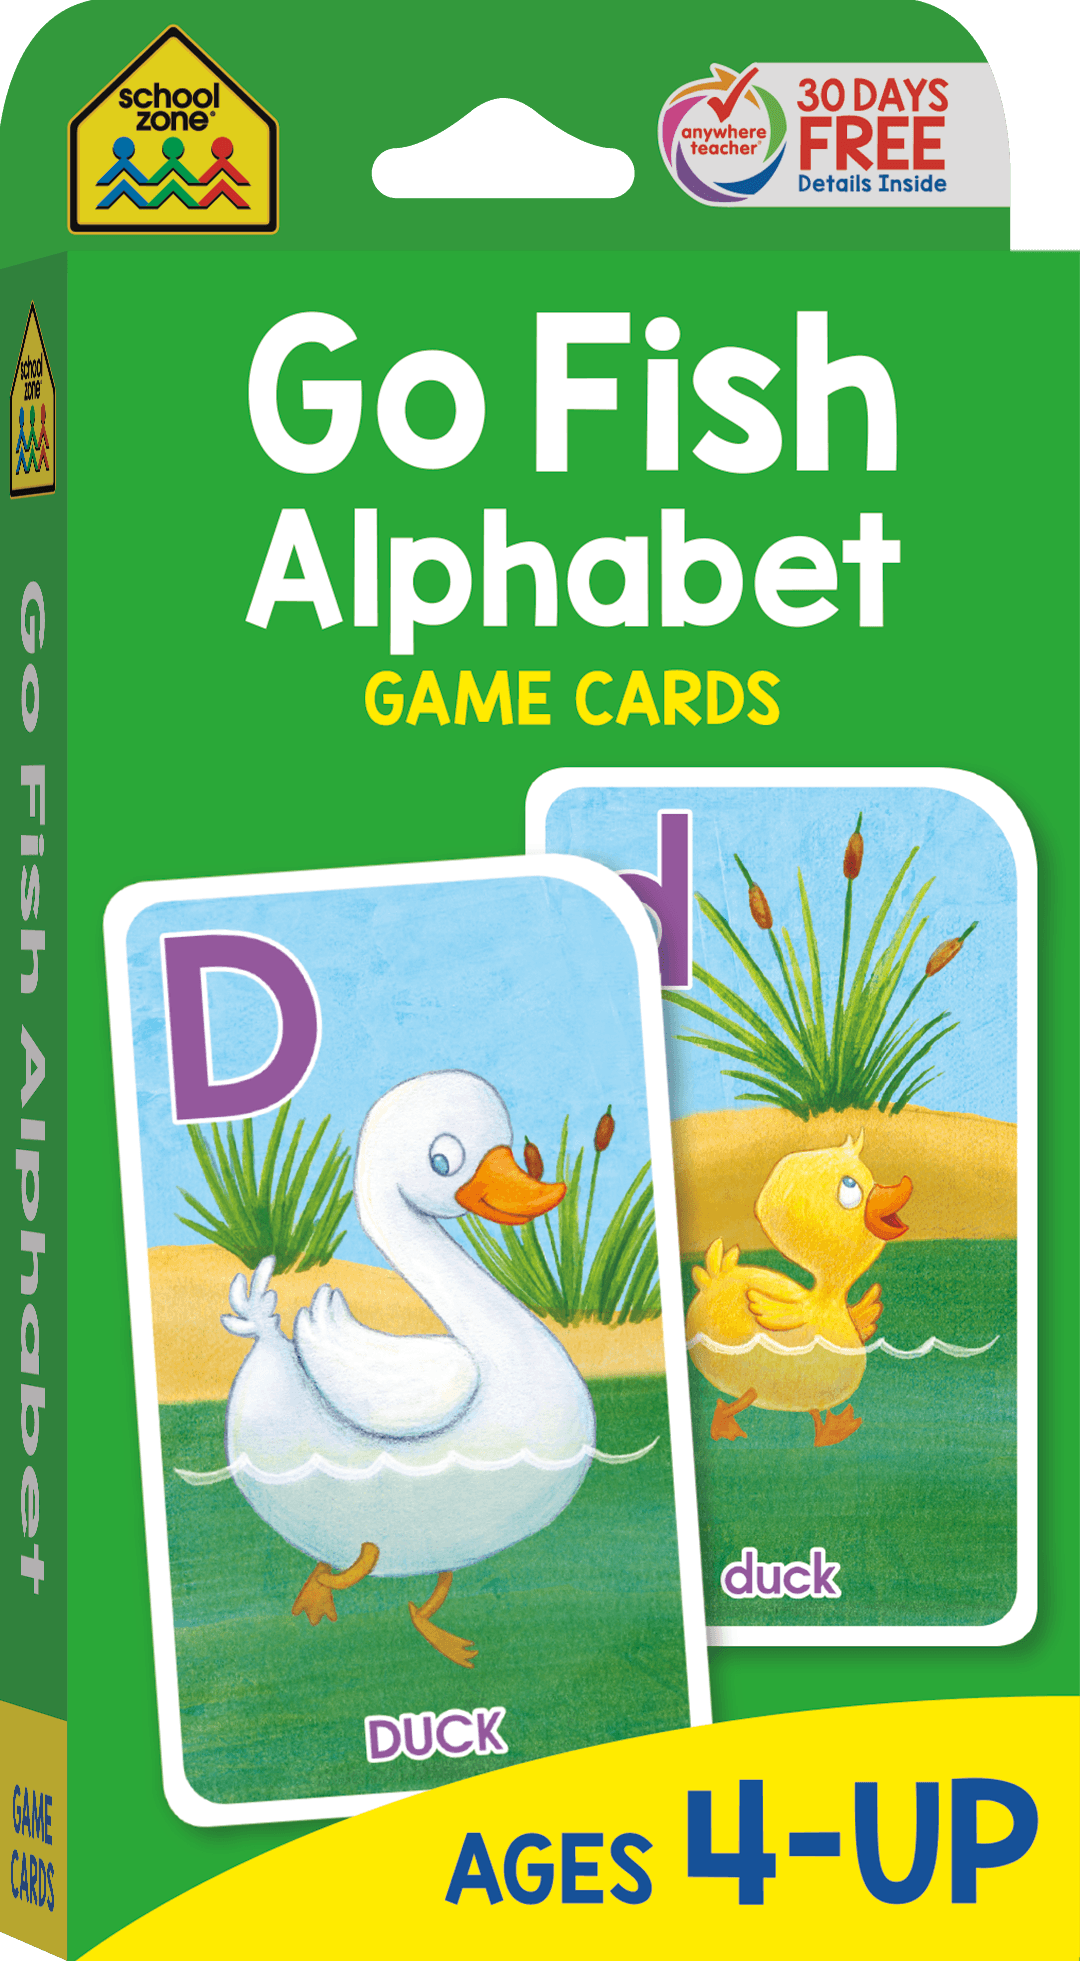 Go Fish Alphabet Game Cards – School Zone Publishing Company